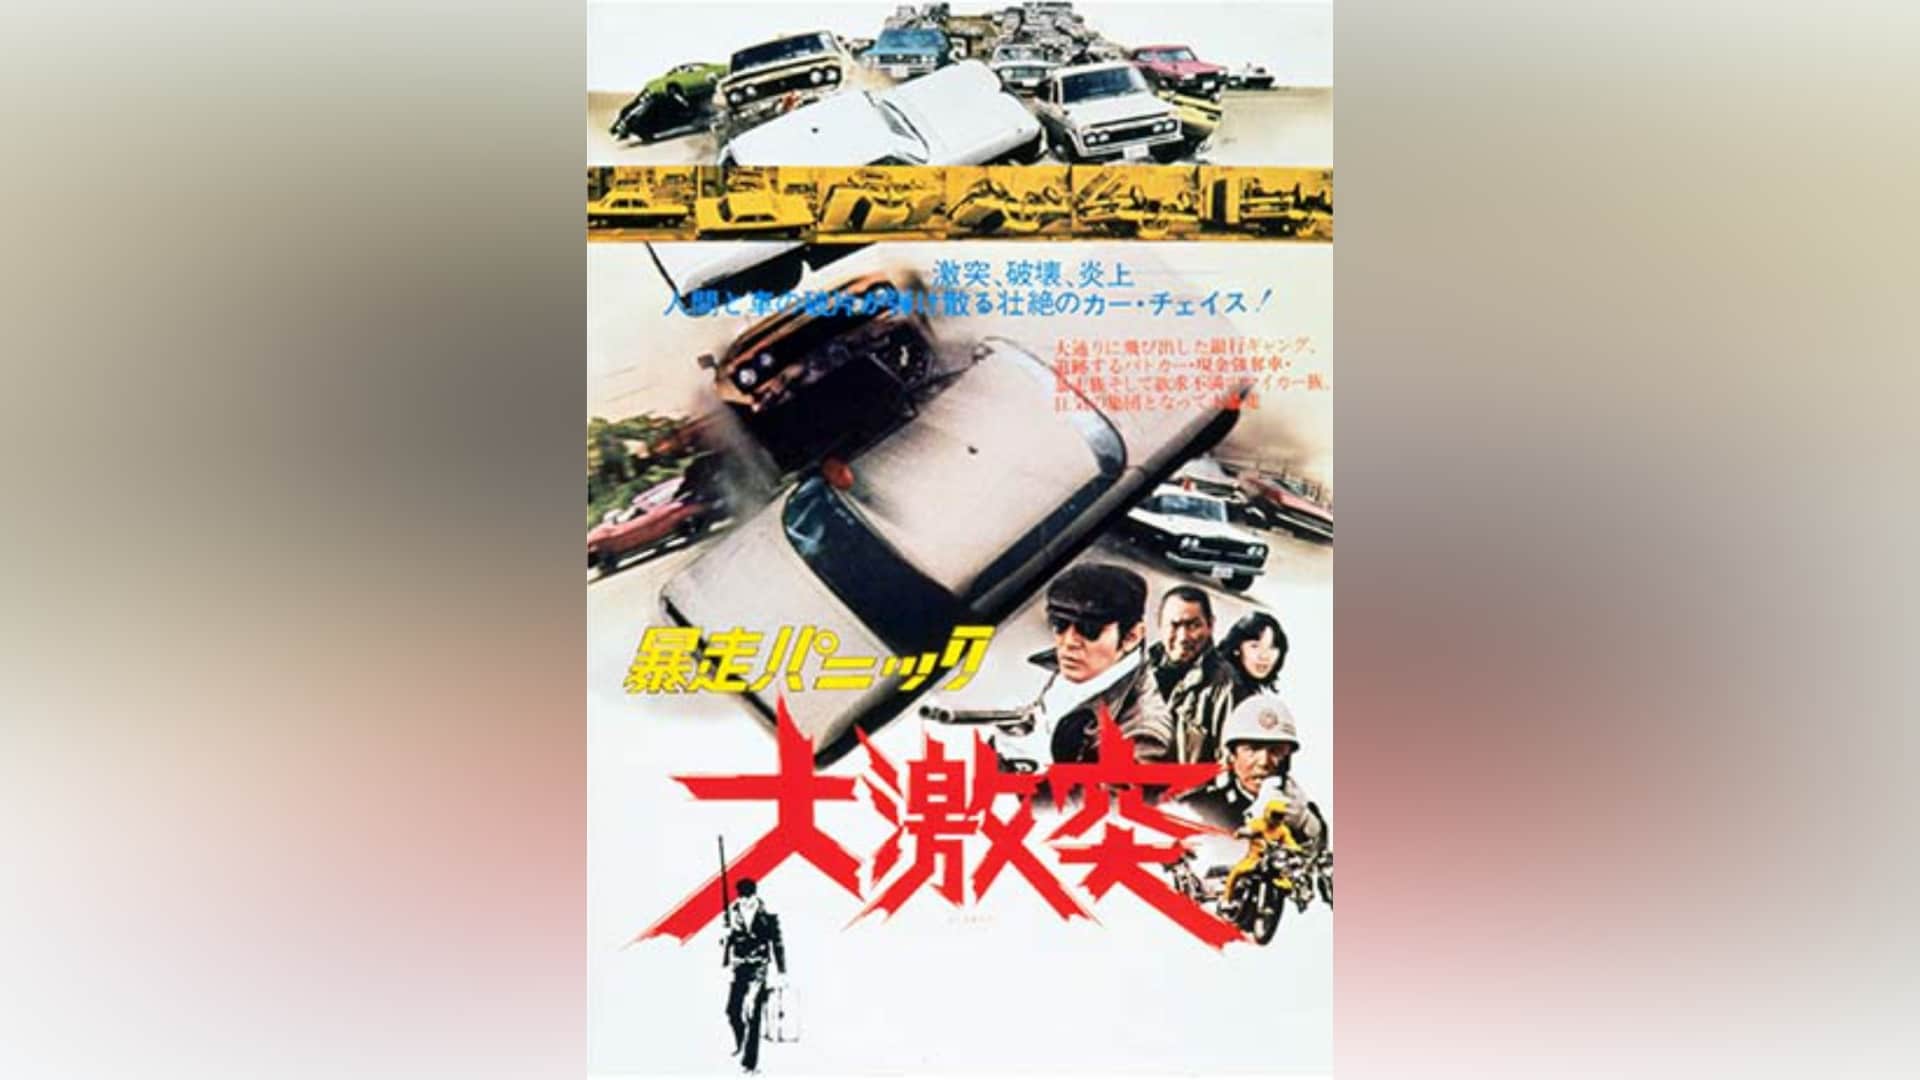 Amazon.co.jp: 暴走パニック大激突 [VHS] : 渡瀬恒彦 - bluecoastrealtygroupllc.com